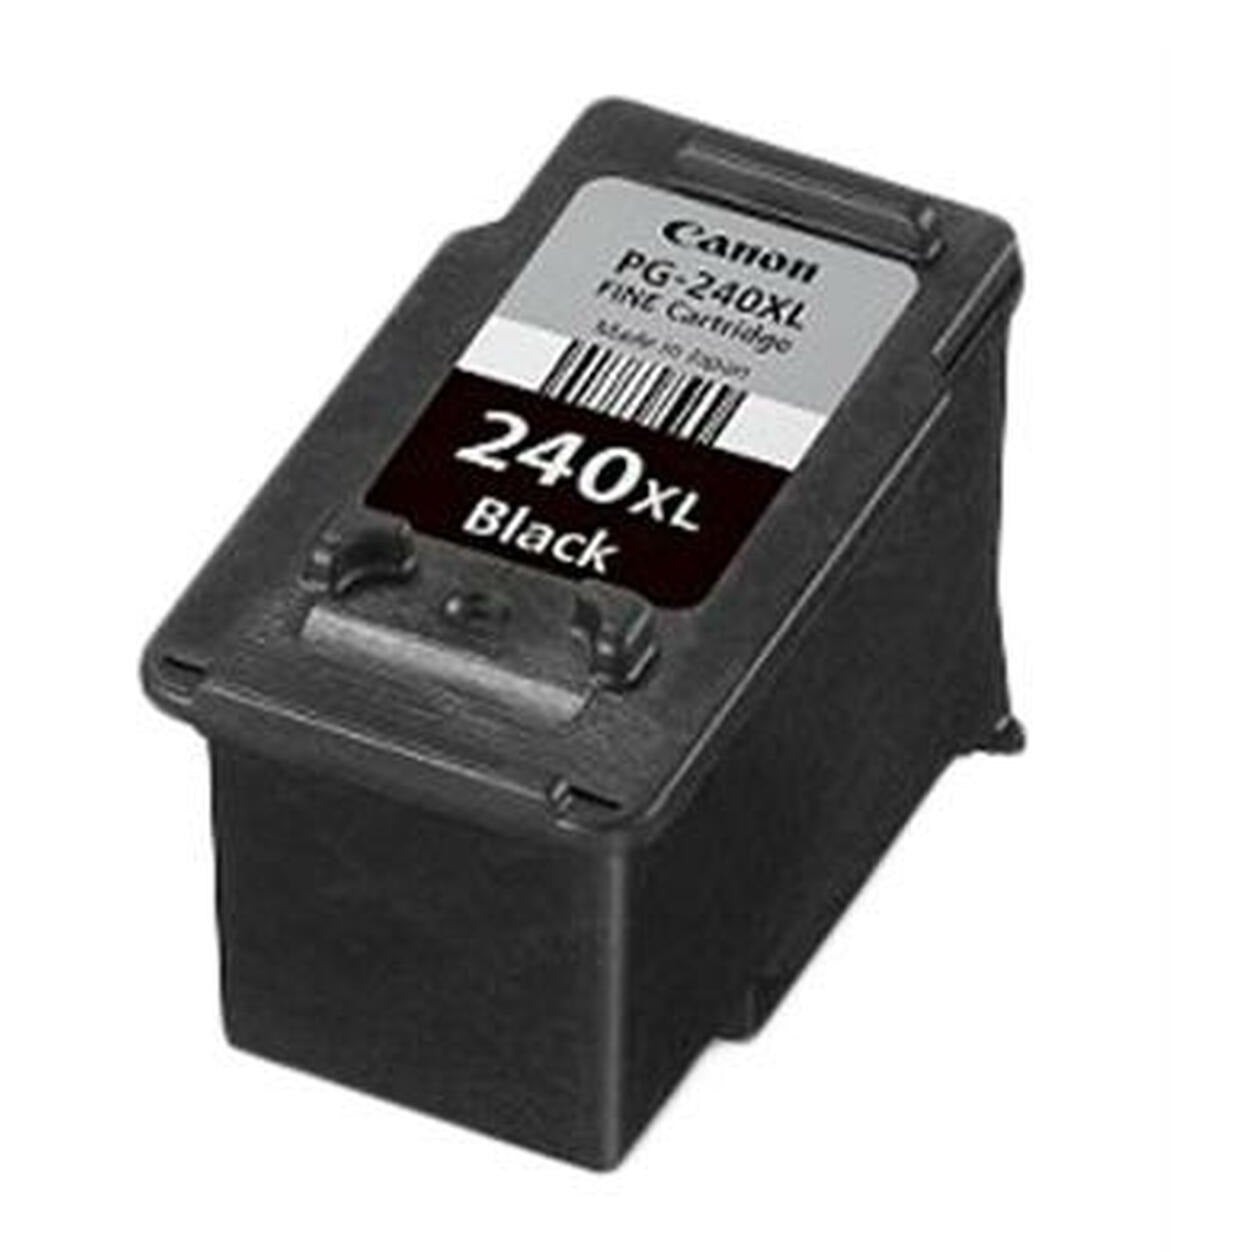 Absolute Toner Canon Genuine OEM PG-240XL Yield Black Ink Cartridge (5206B001) Canon Ink Cartridges